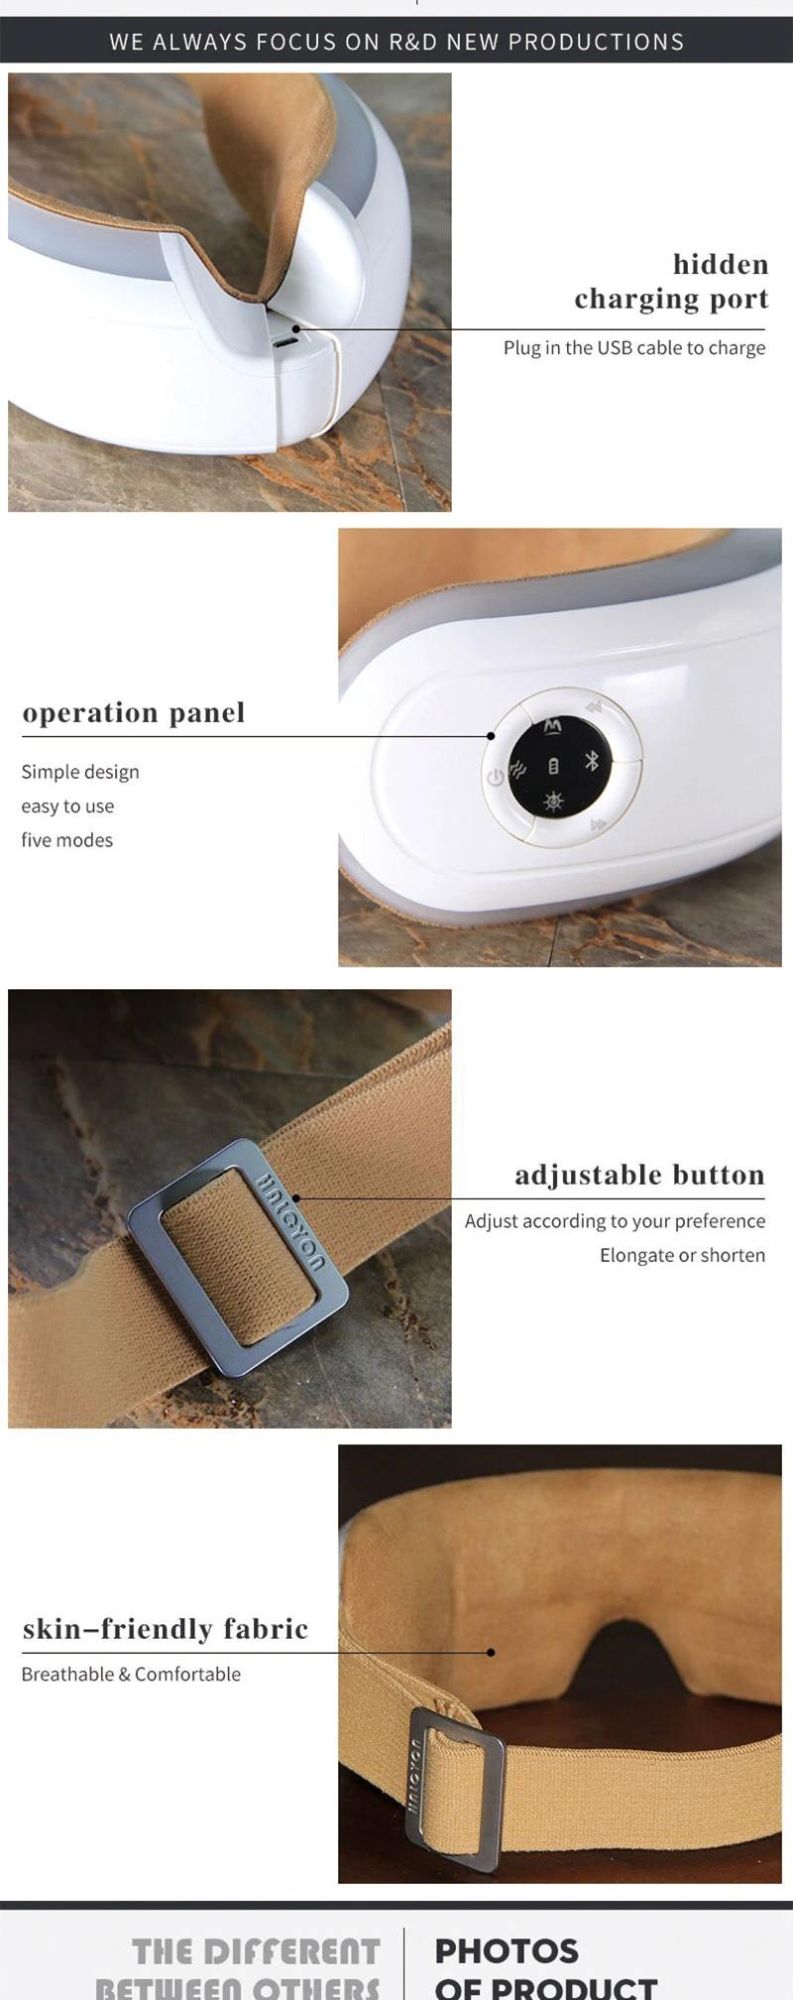 Hezheng Wireless Mini Electric Air Pressure Eye Health Care Instrument Far-Infrared Heating Eye Massager